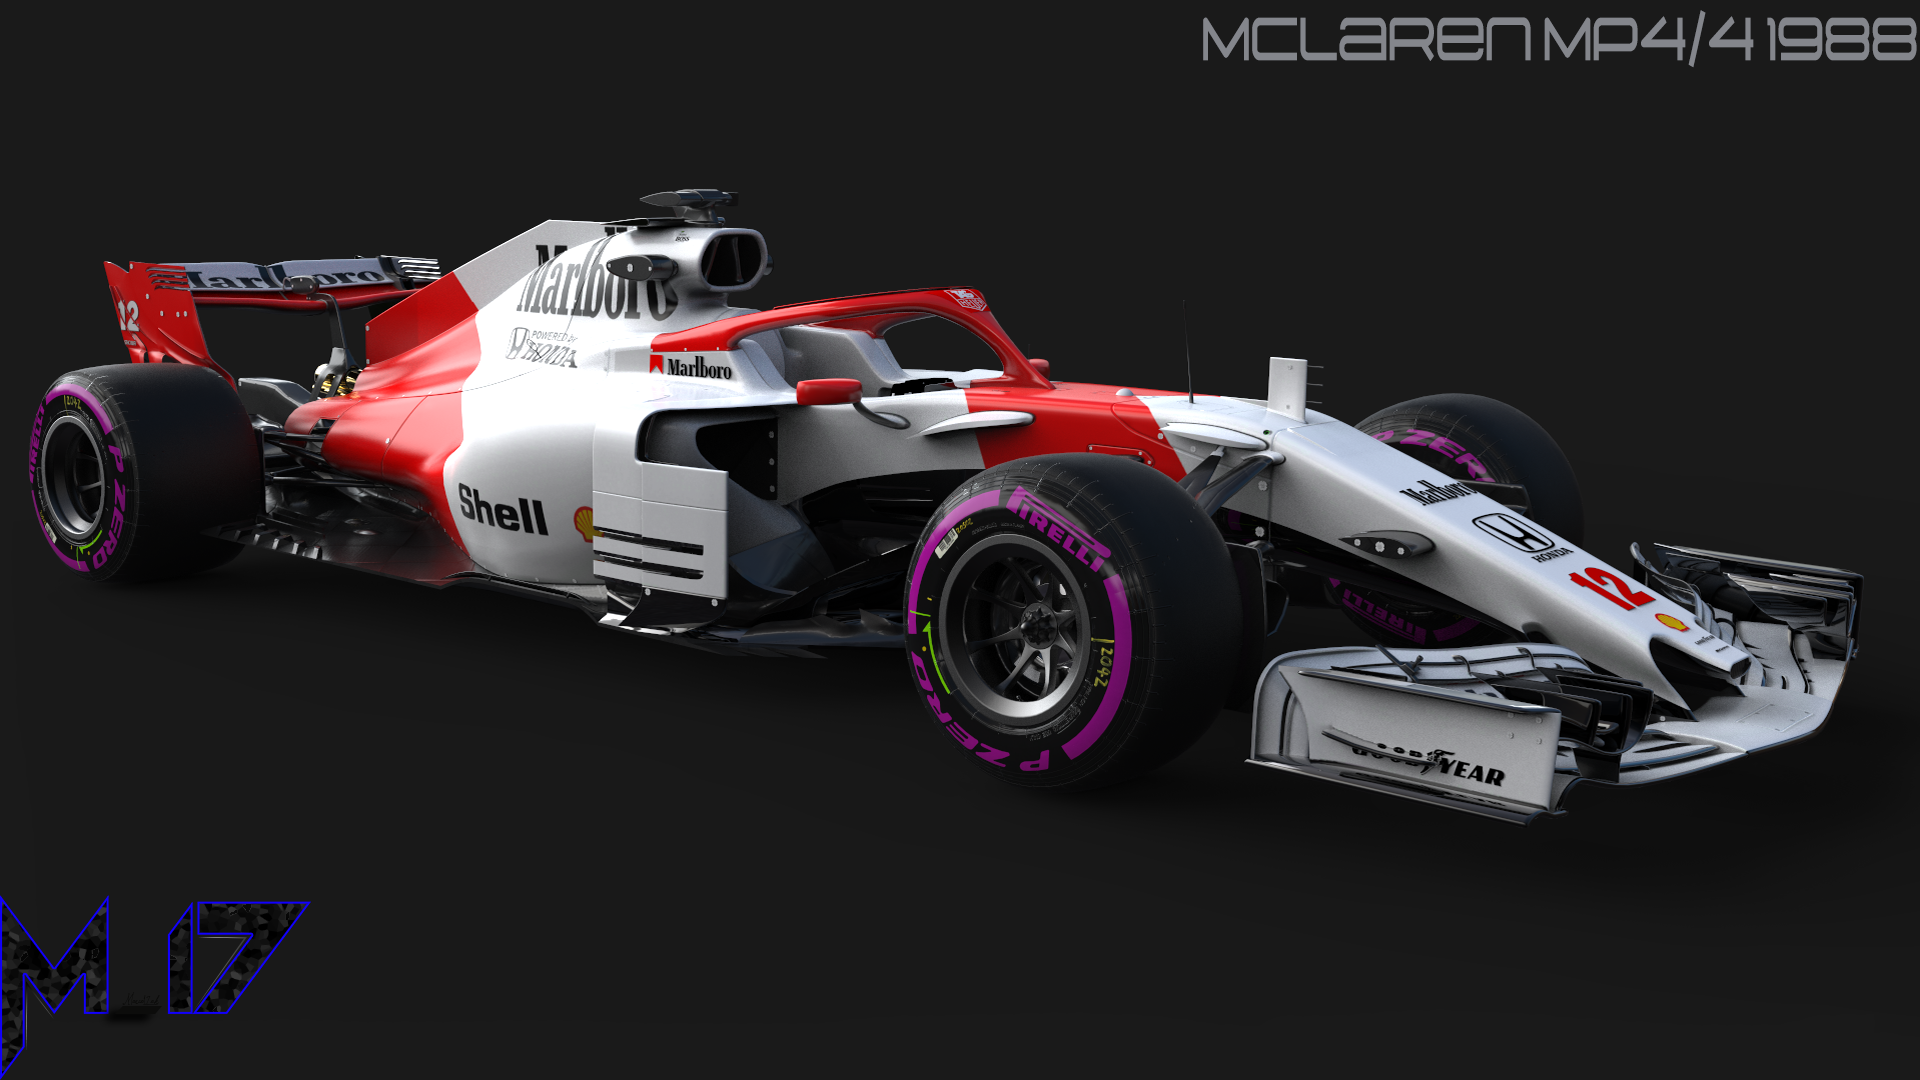 Formula Hybrid 2018. McLaren MP4 4 1988 Skin